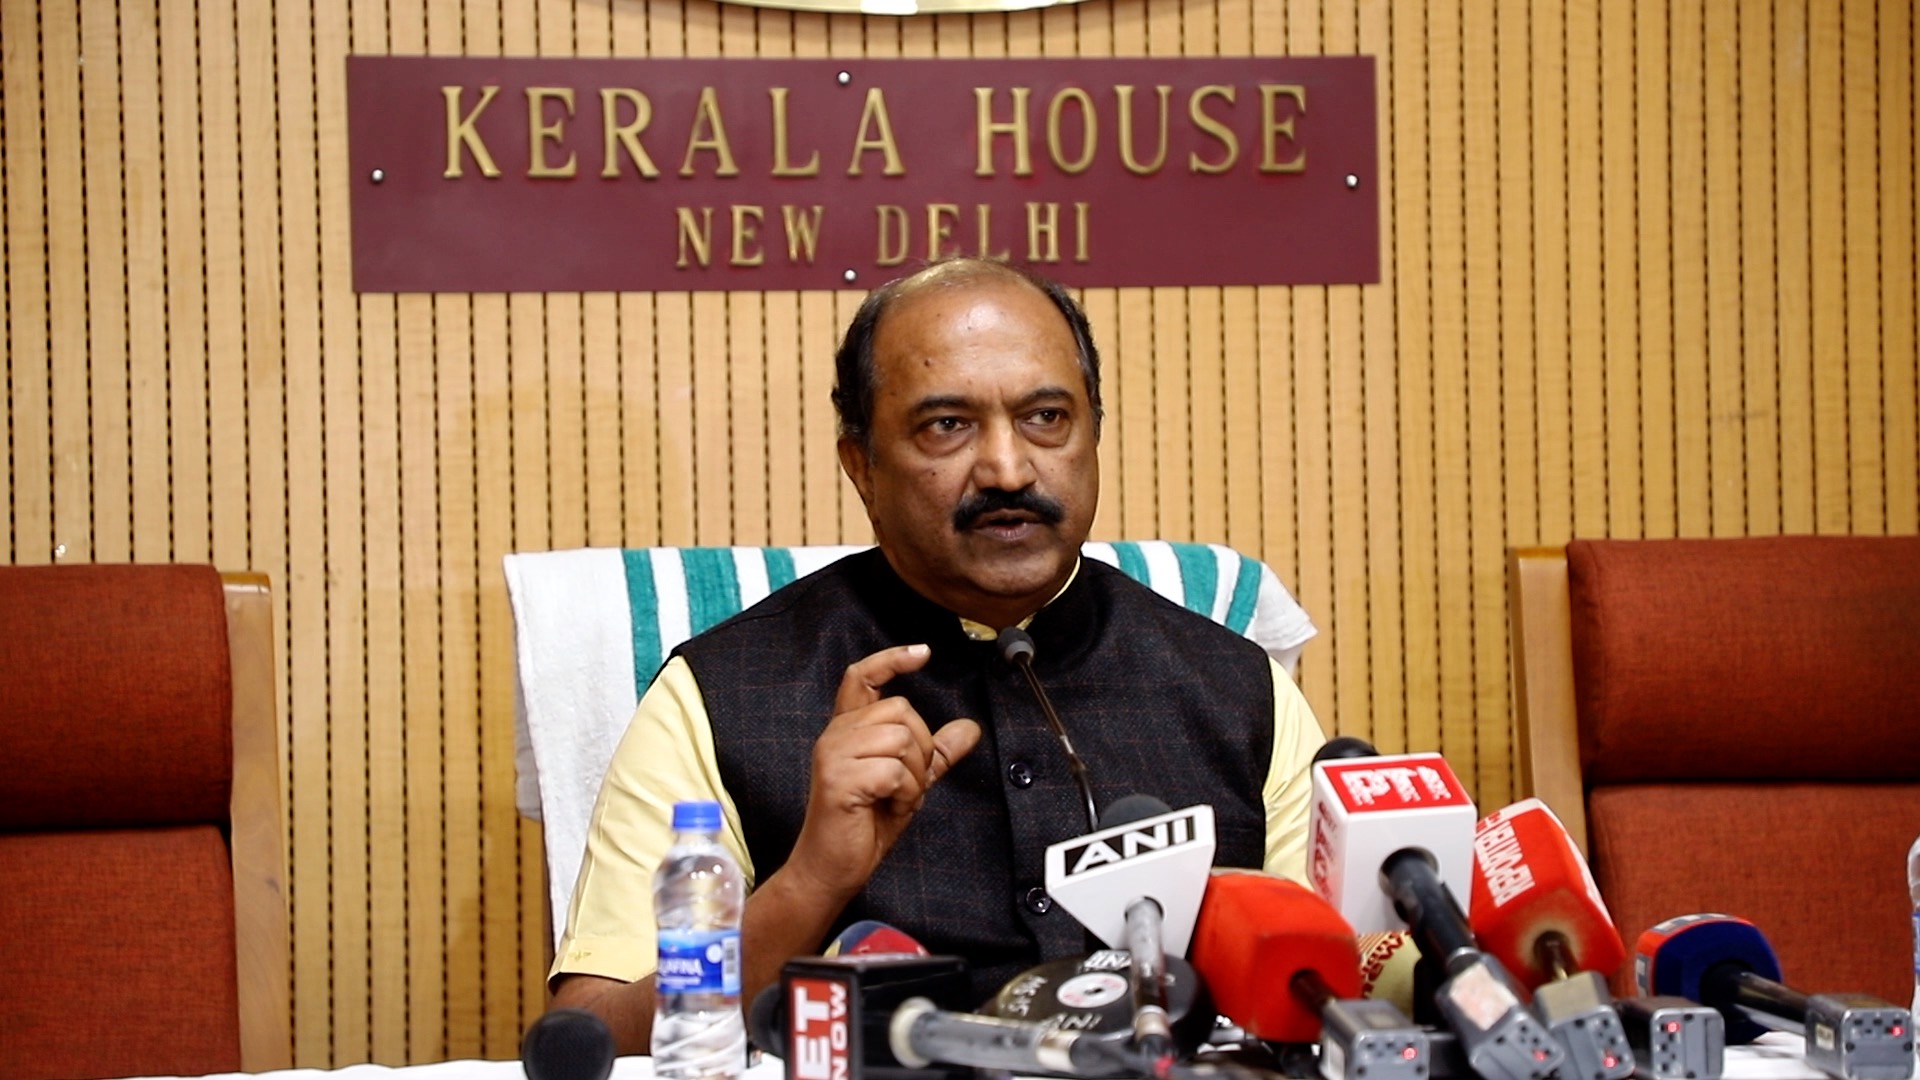 Kerala Finance Minister KN Balagopal addressing the media in New Delhi on Thursday, 15 February. (Supplied)